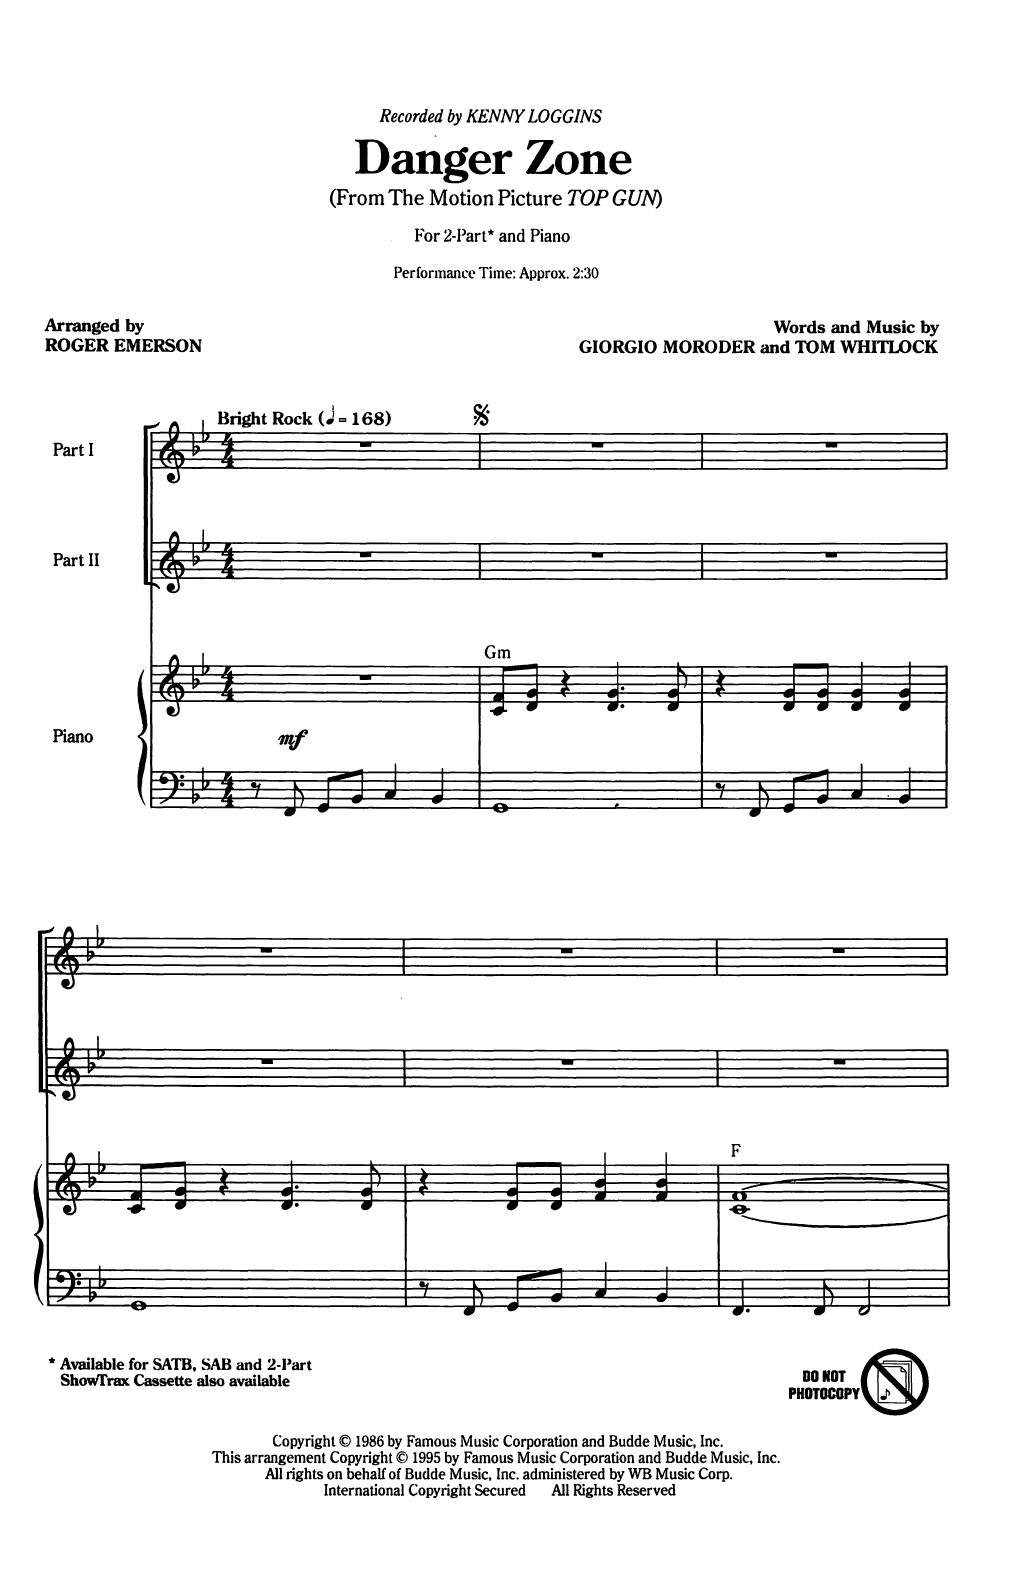 Kenny Loggins Danger Zone (arr. Roger Emerson) Sheet Music Notes & Chords for 2-Part Choir - Download or Print PDF